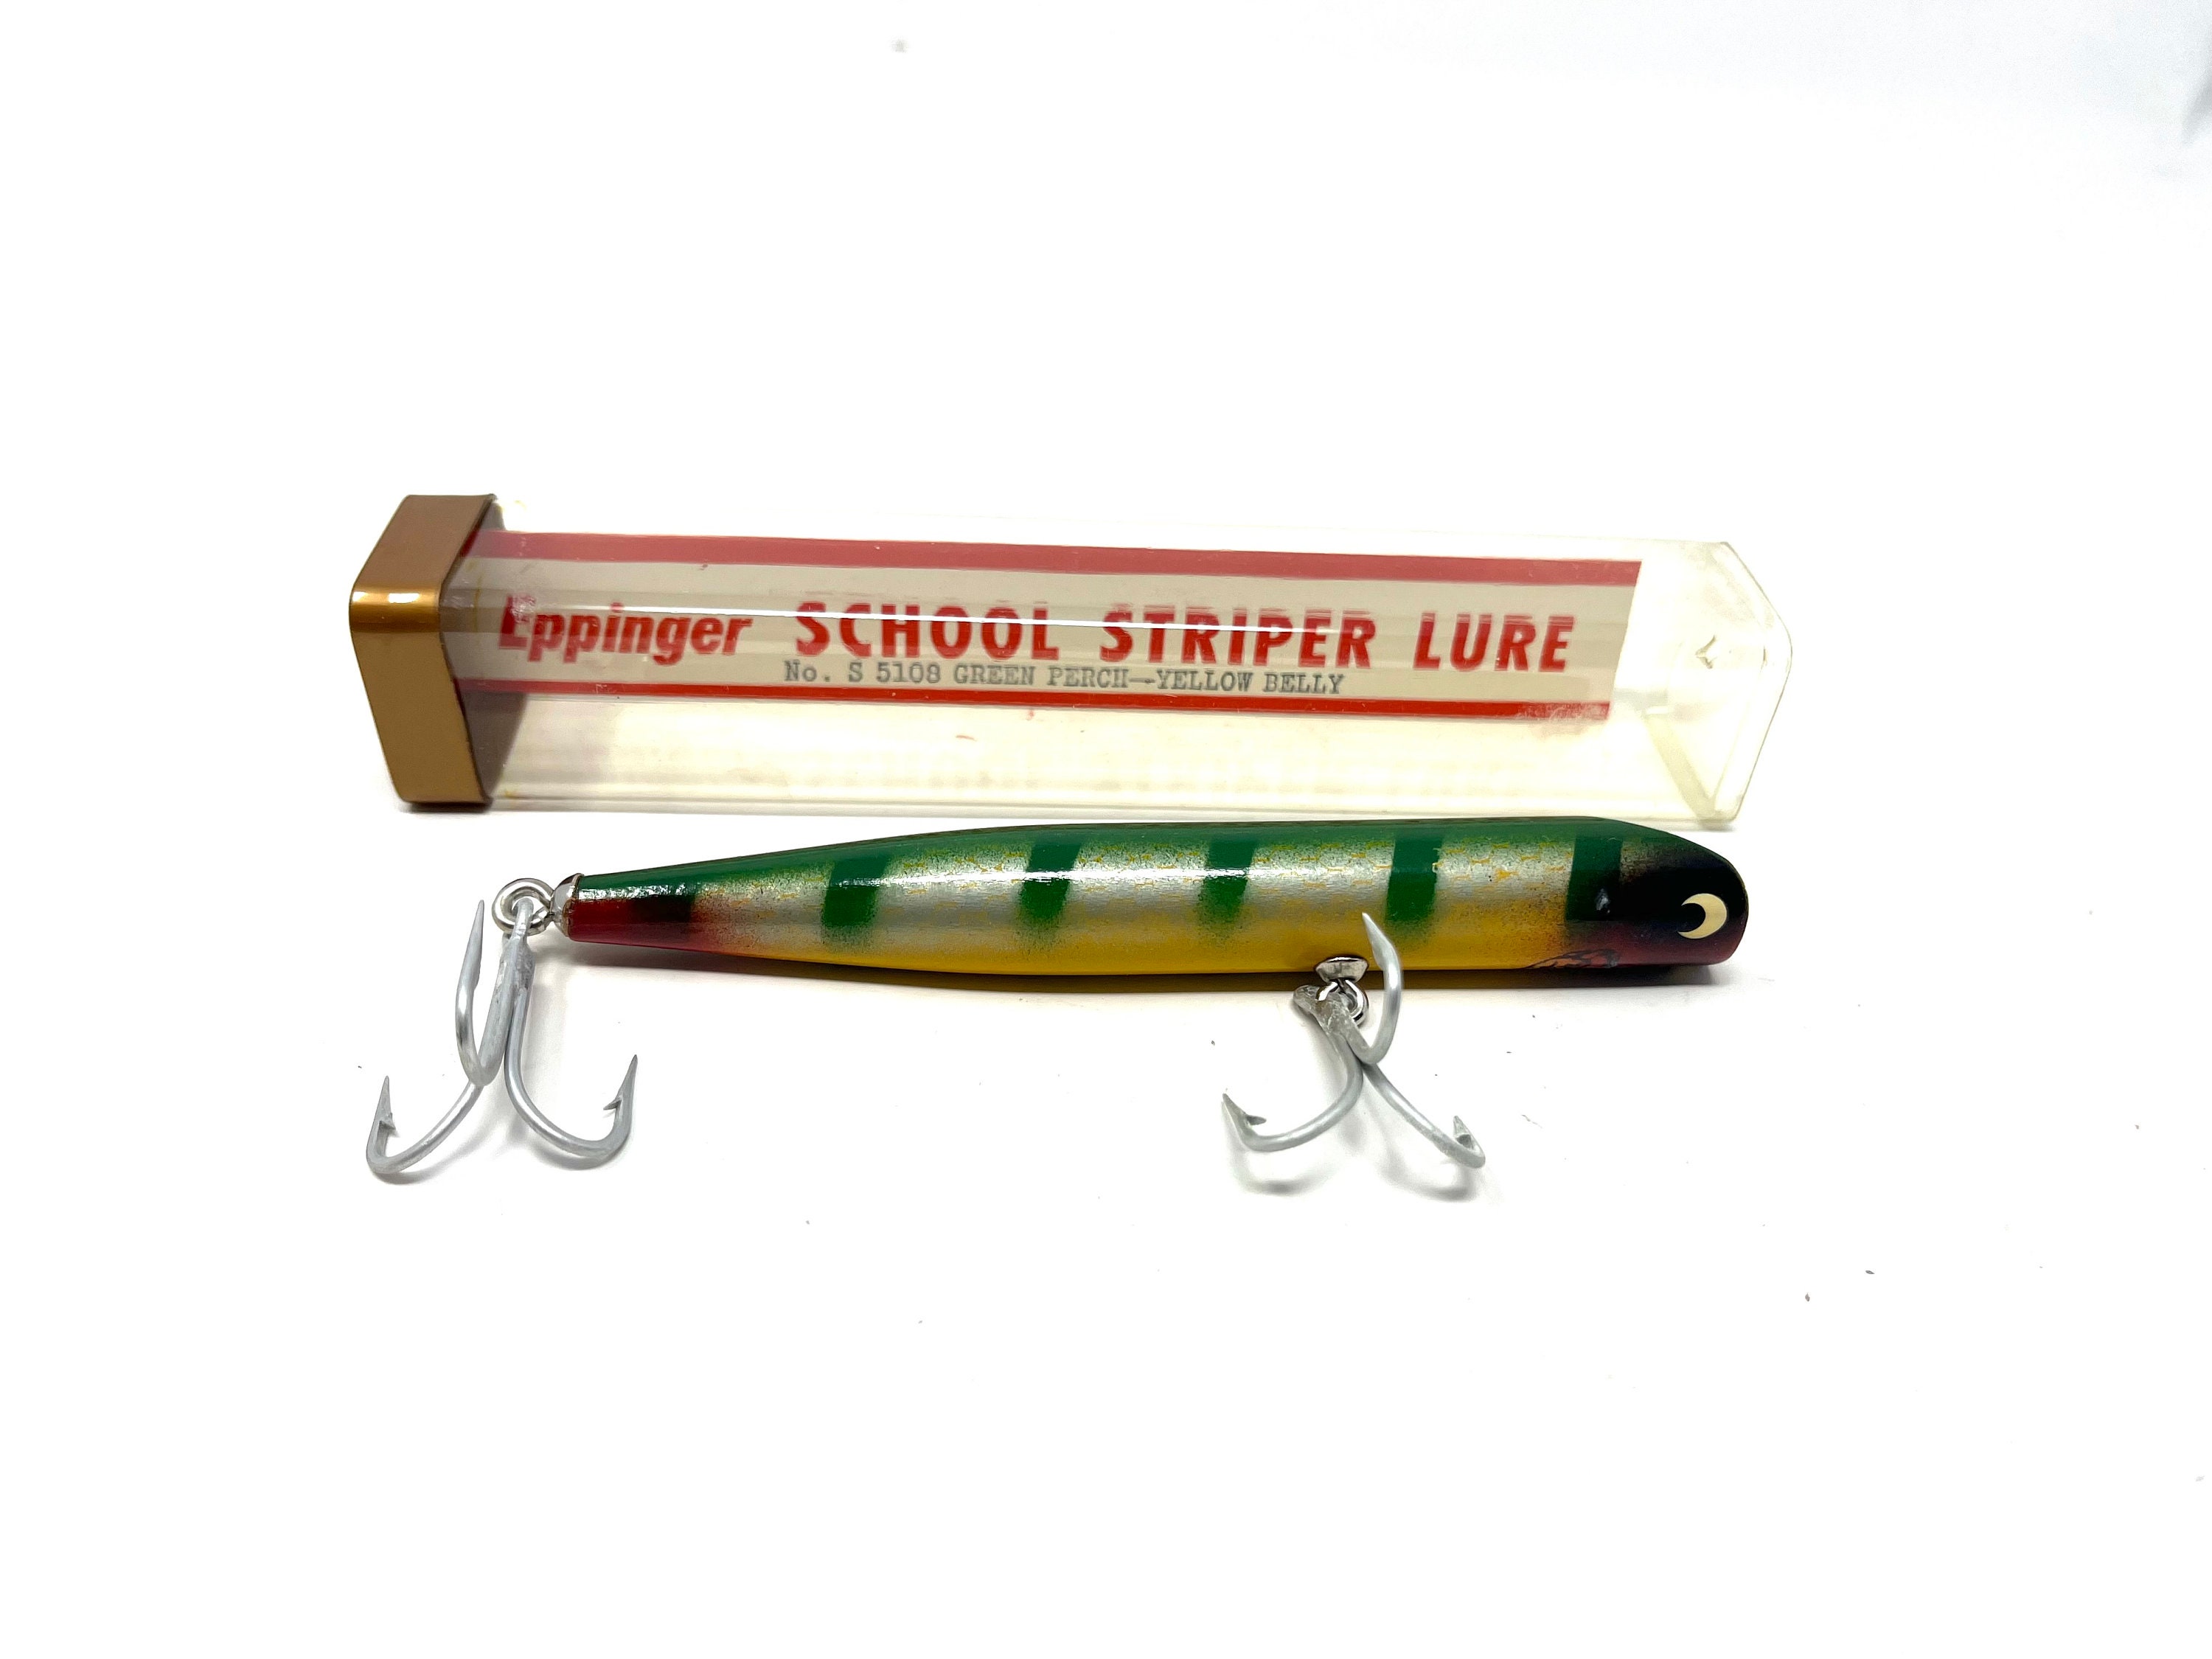 Vintage Eppinger School Striper Fishing Lure With Original Box